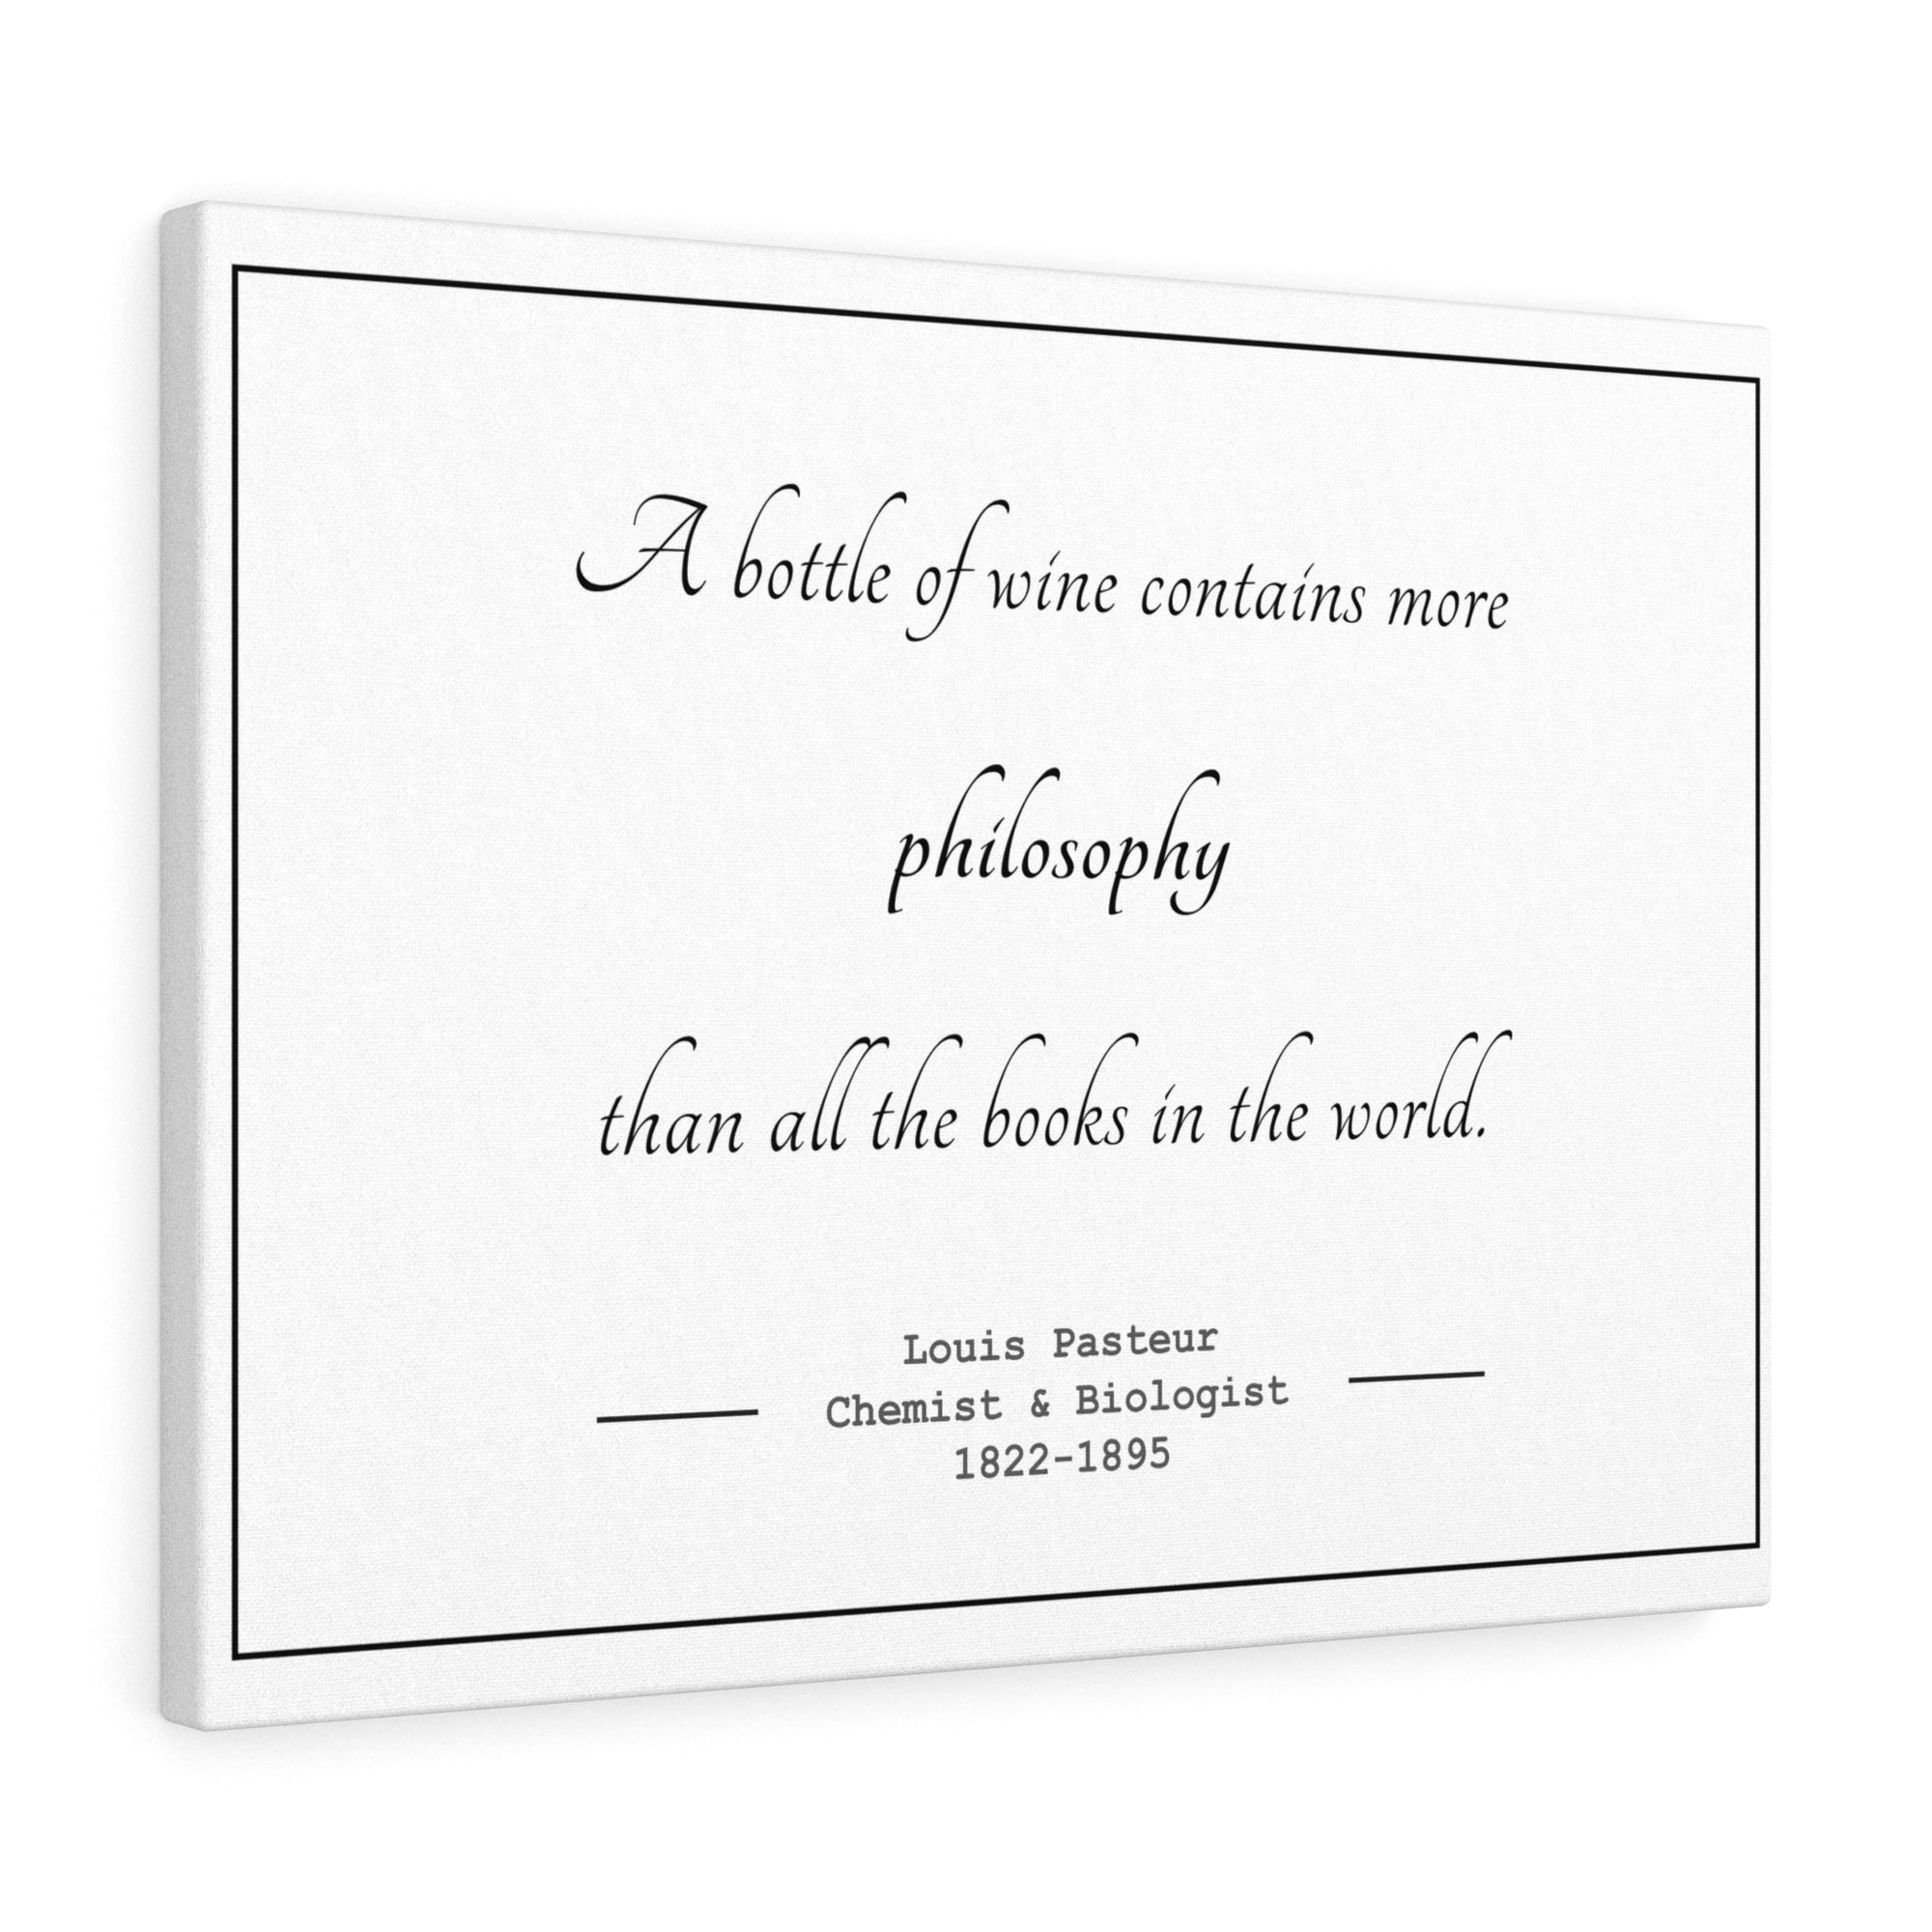 GLG - Louis Pasteur wine philosophy quote